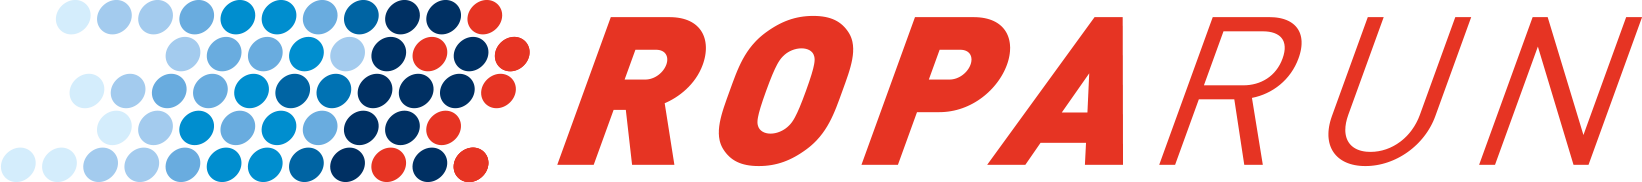 roparun logo